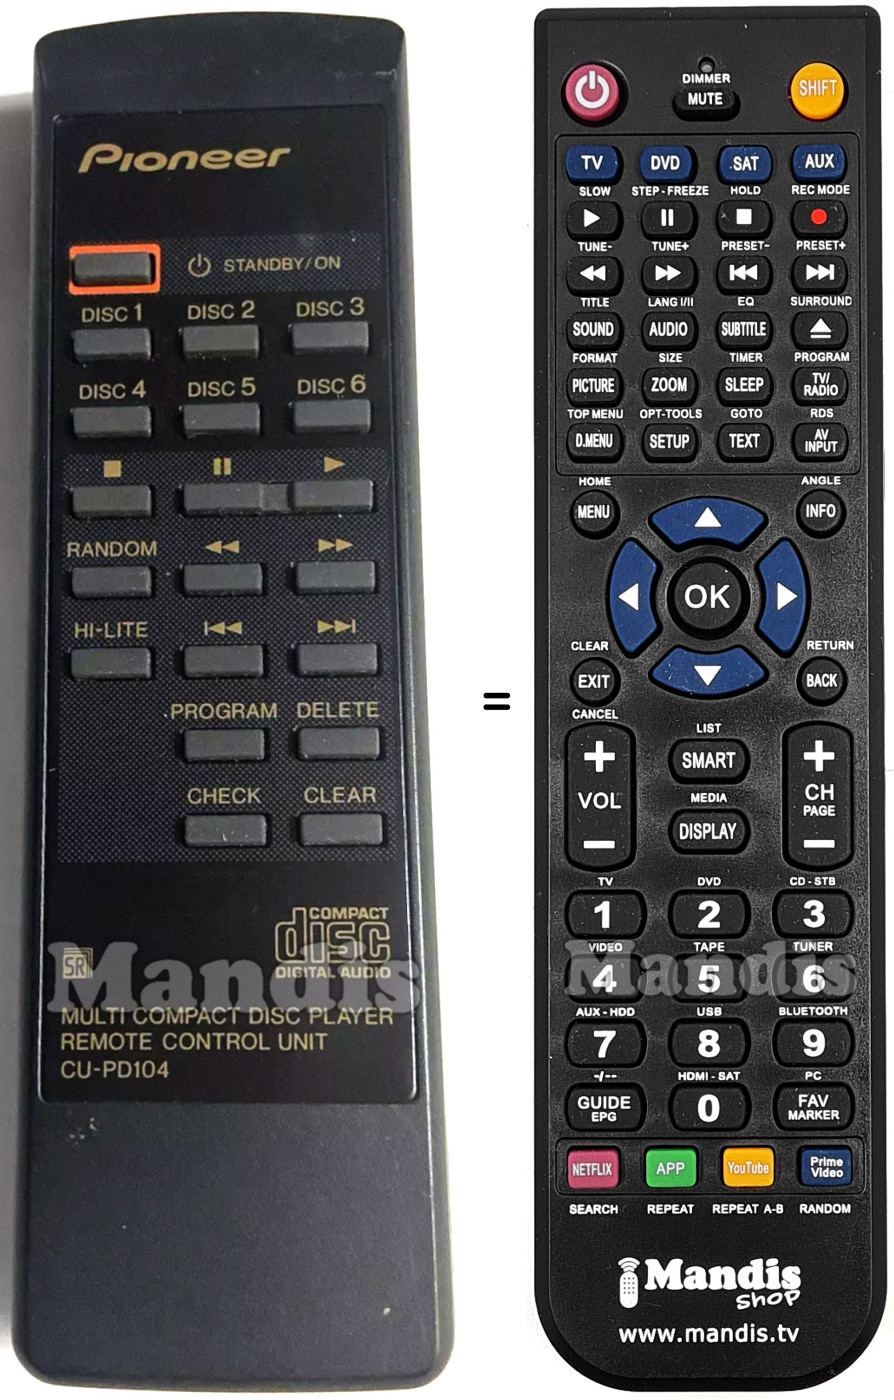 Replacement remote control Pioneer CU-PD104